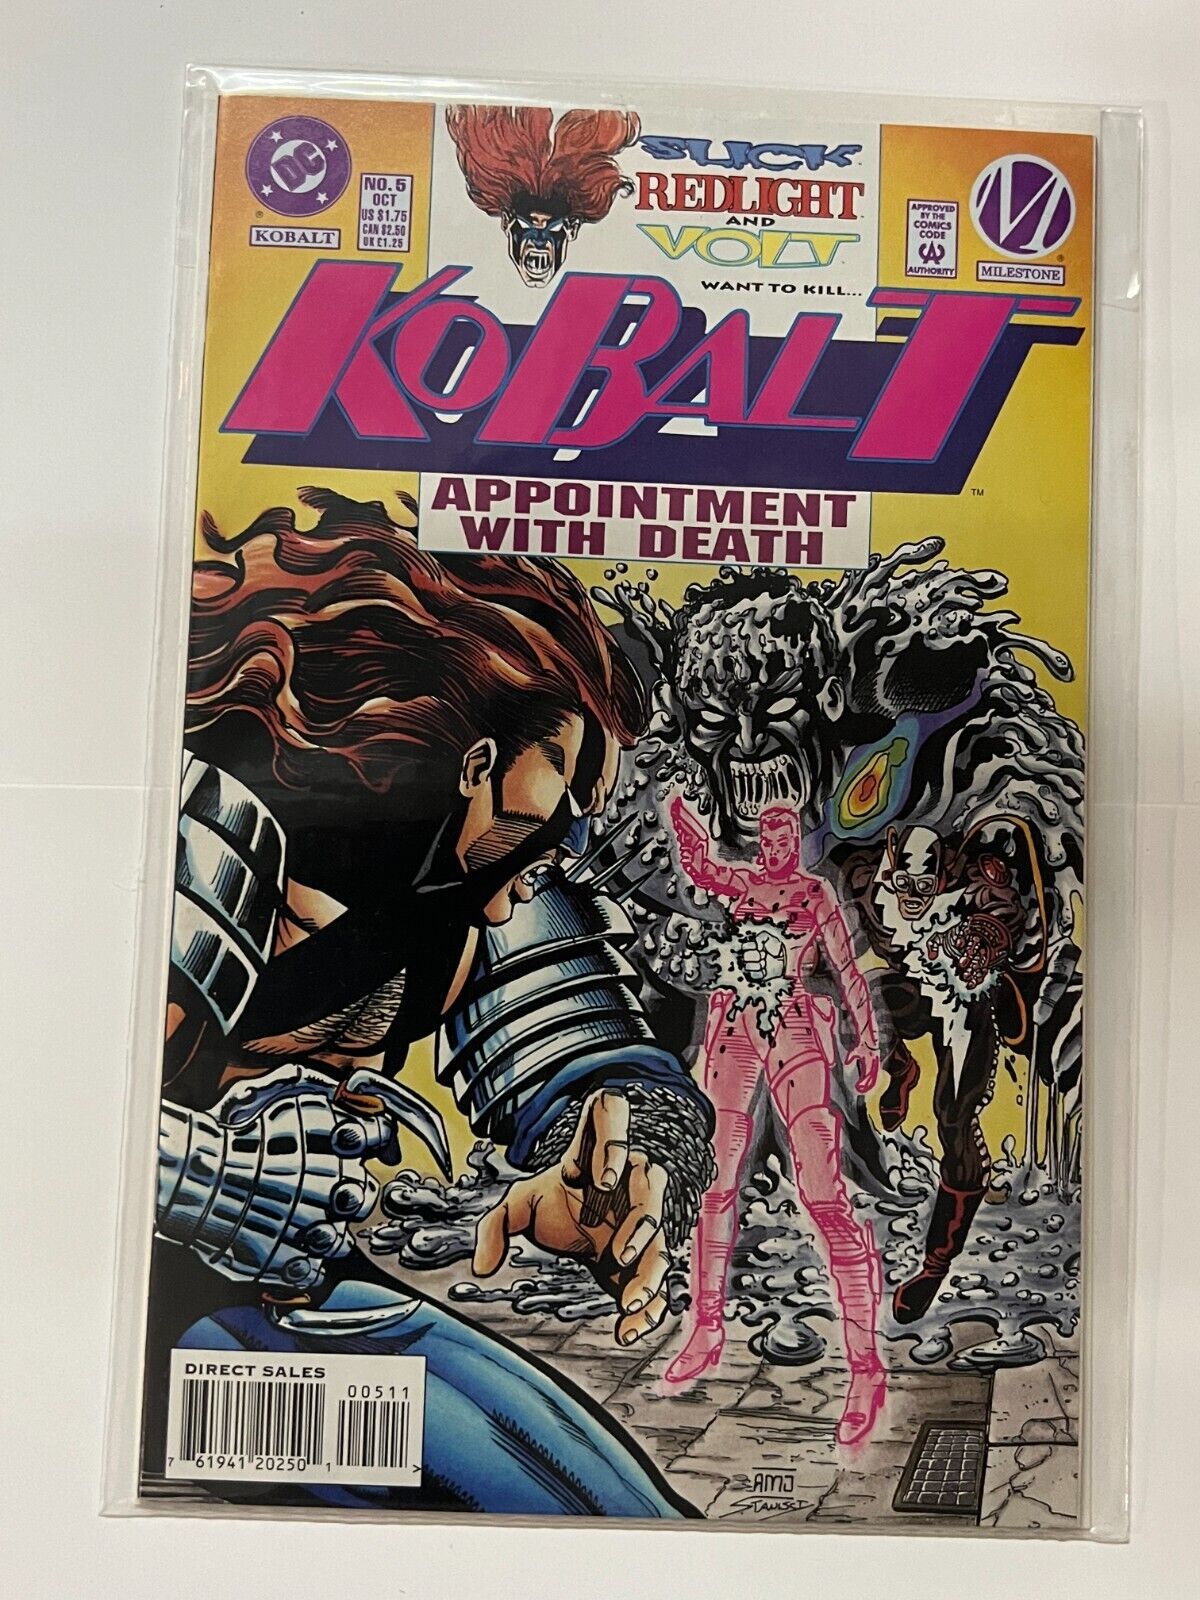 Kobalt #5 Suck Redlight & Volt Appointment Death 1994 DC Milestone Comics | Com